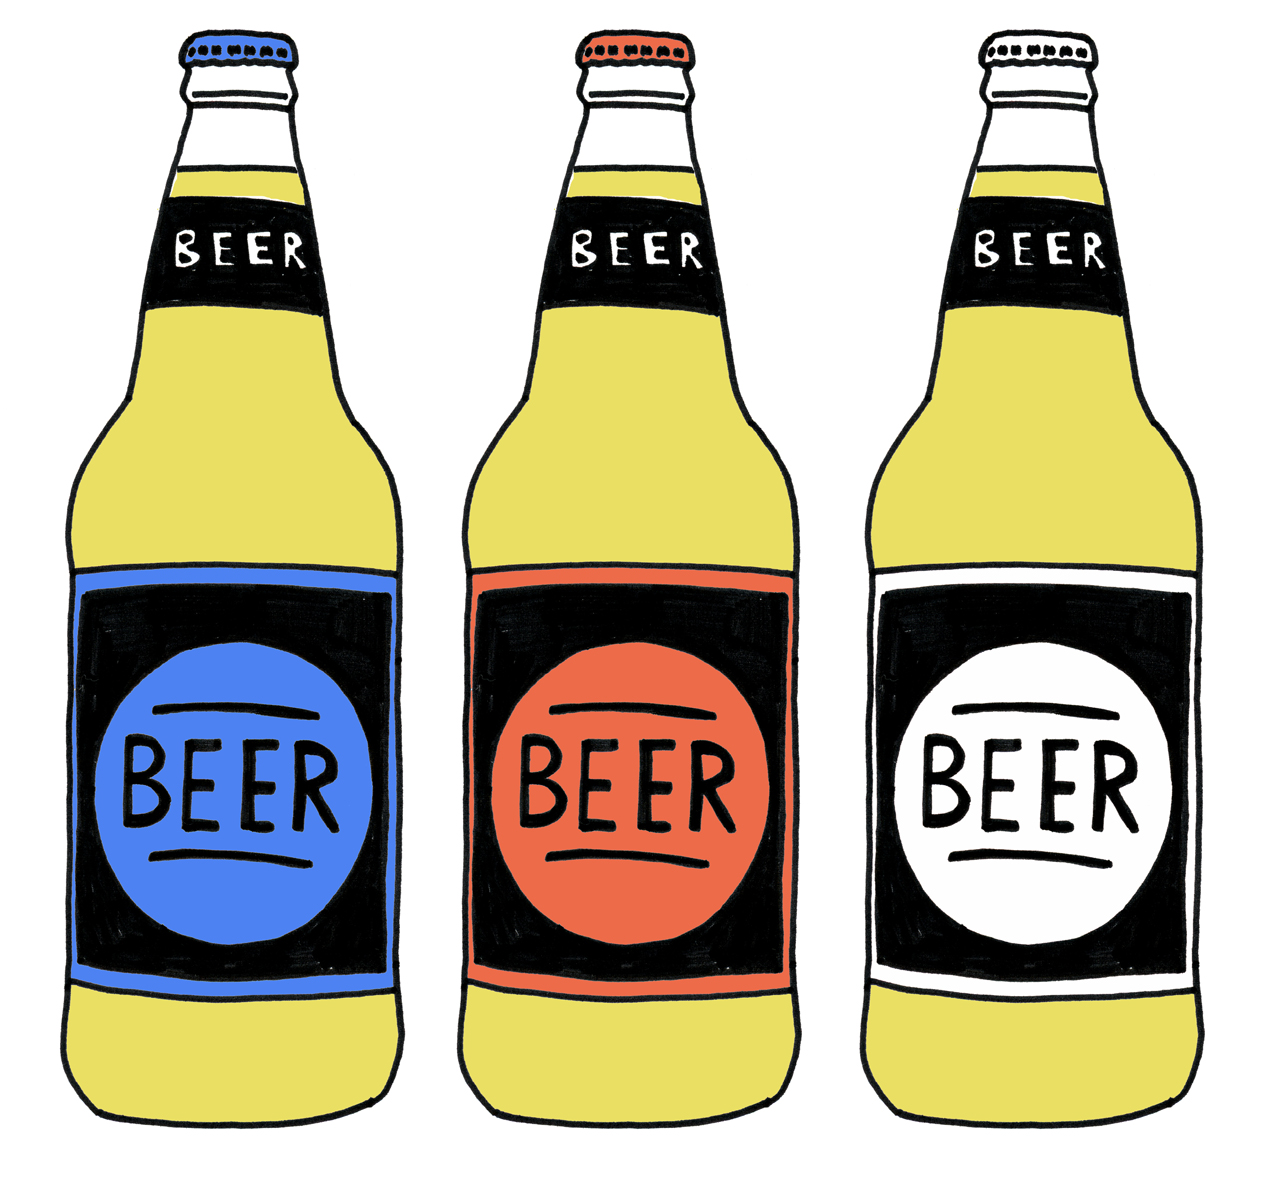 Beer and Cider bottle illustrations | || Analogue Forever